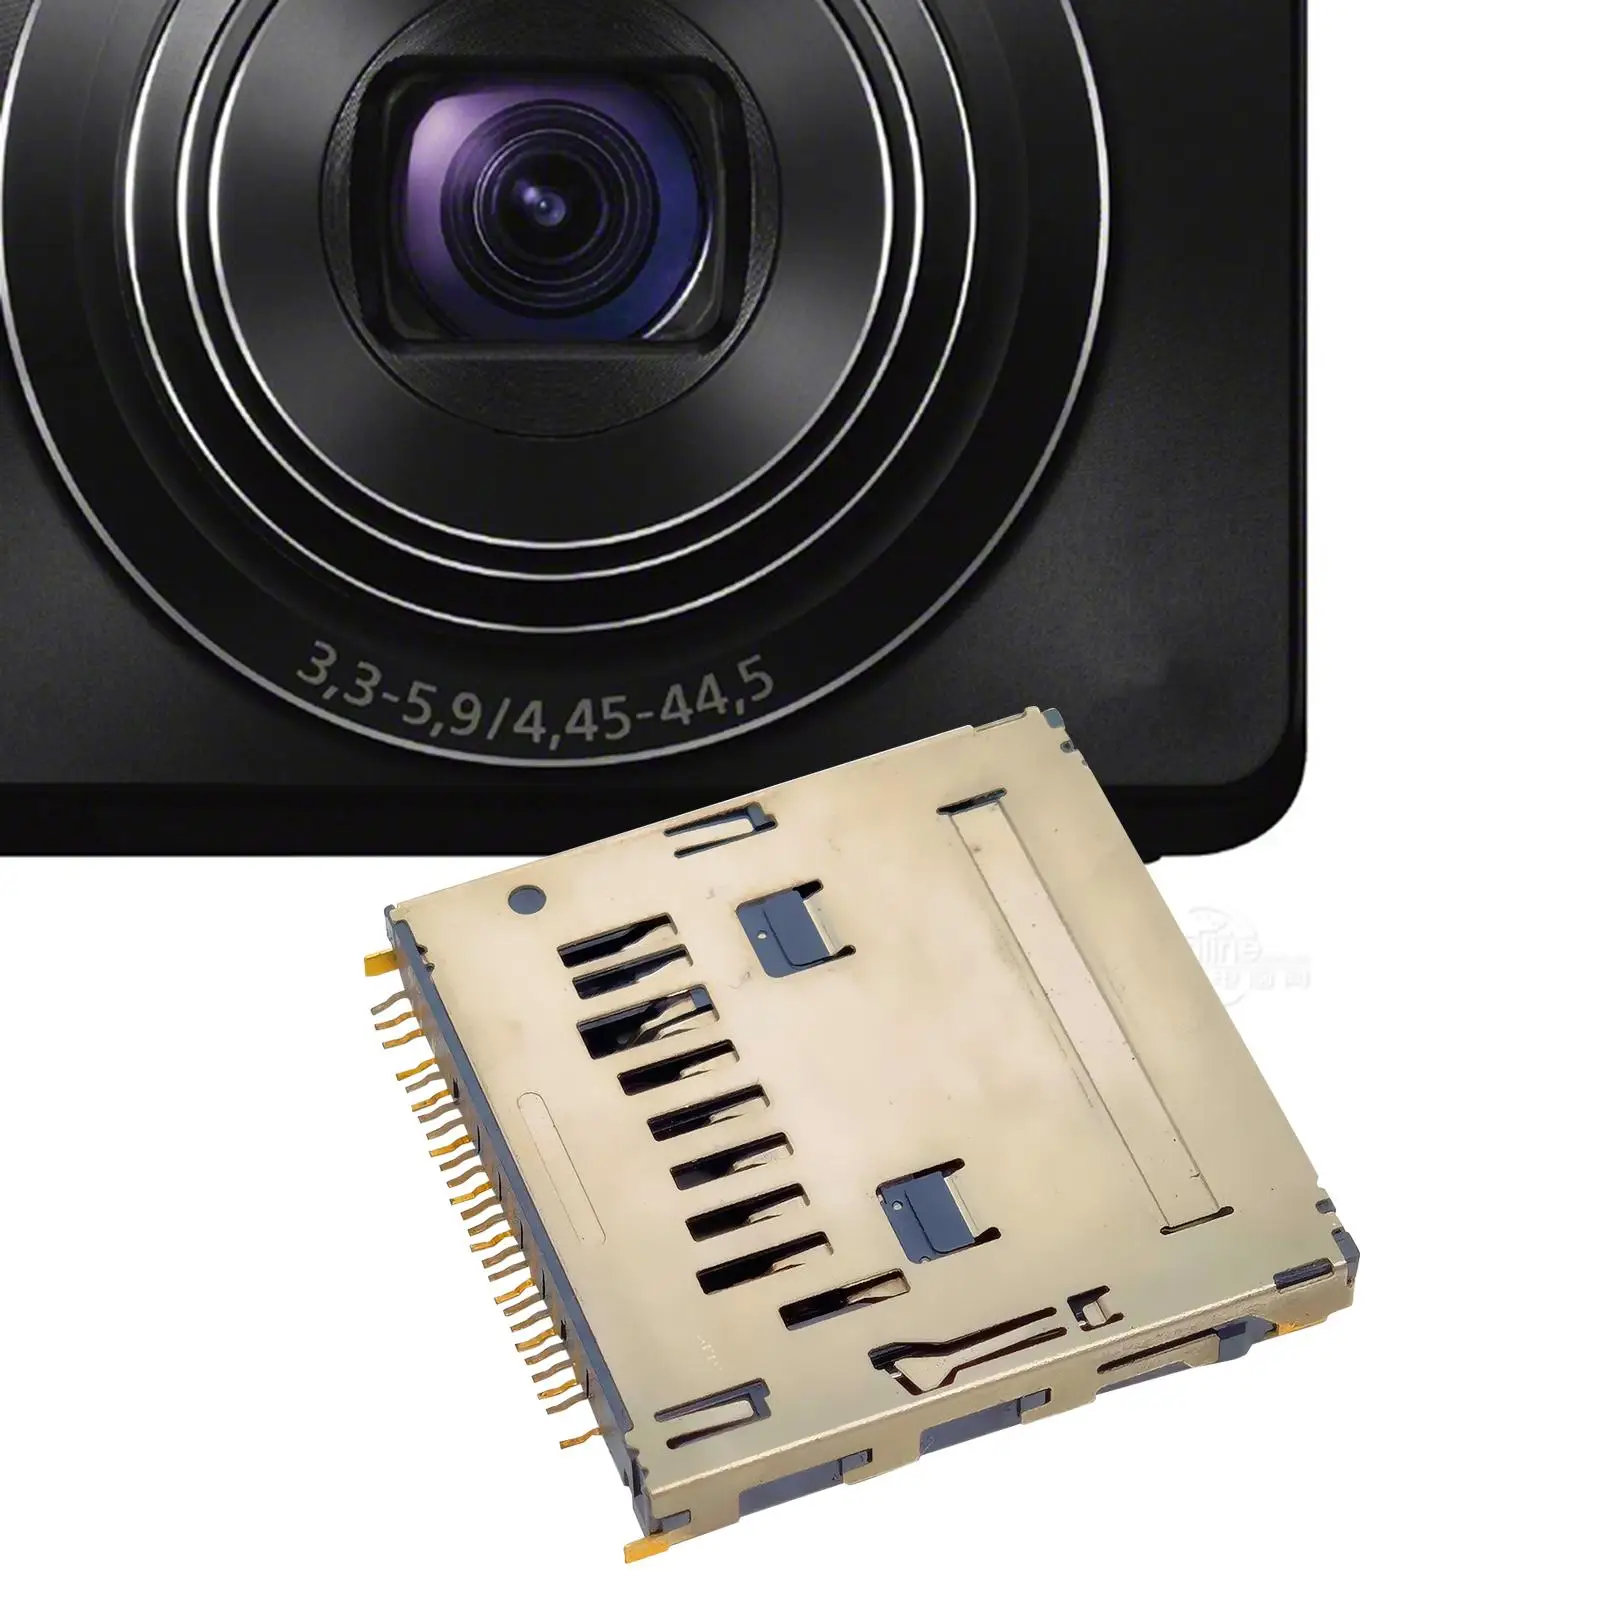 High Quality SD Card Slot Electronic Components for W310 W670 W690 W610 Digital Camera